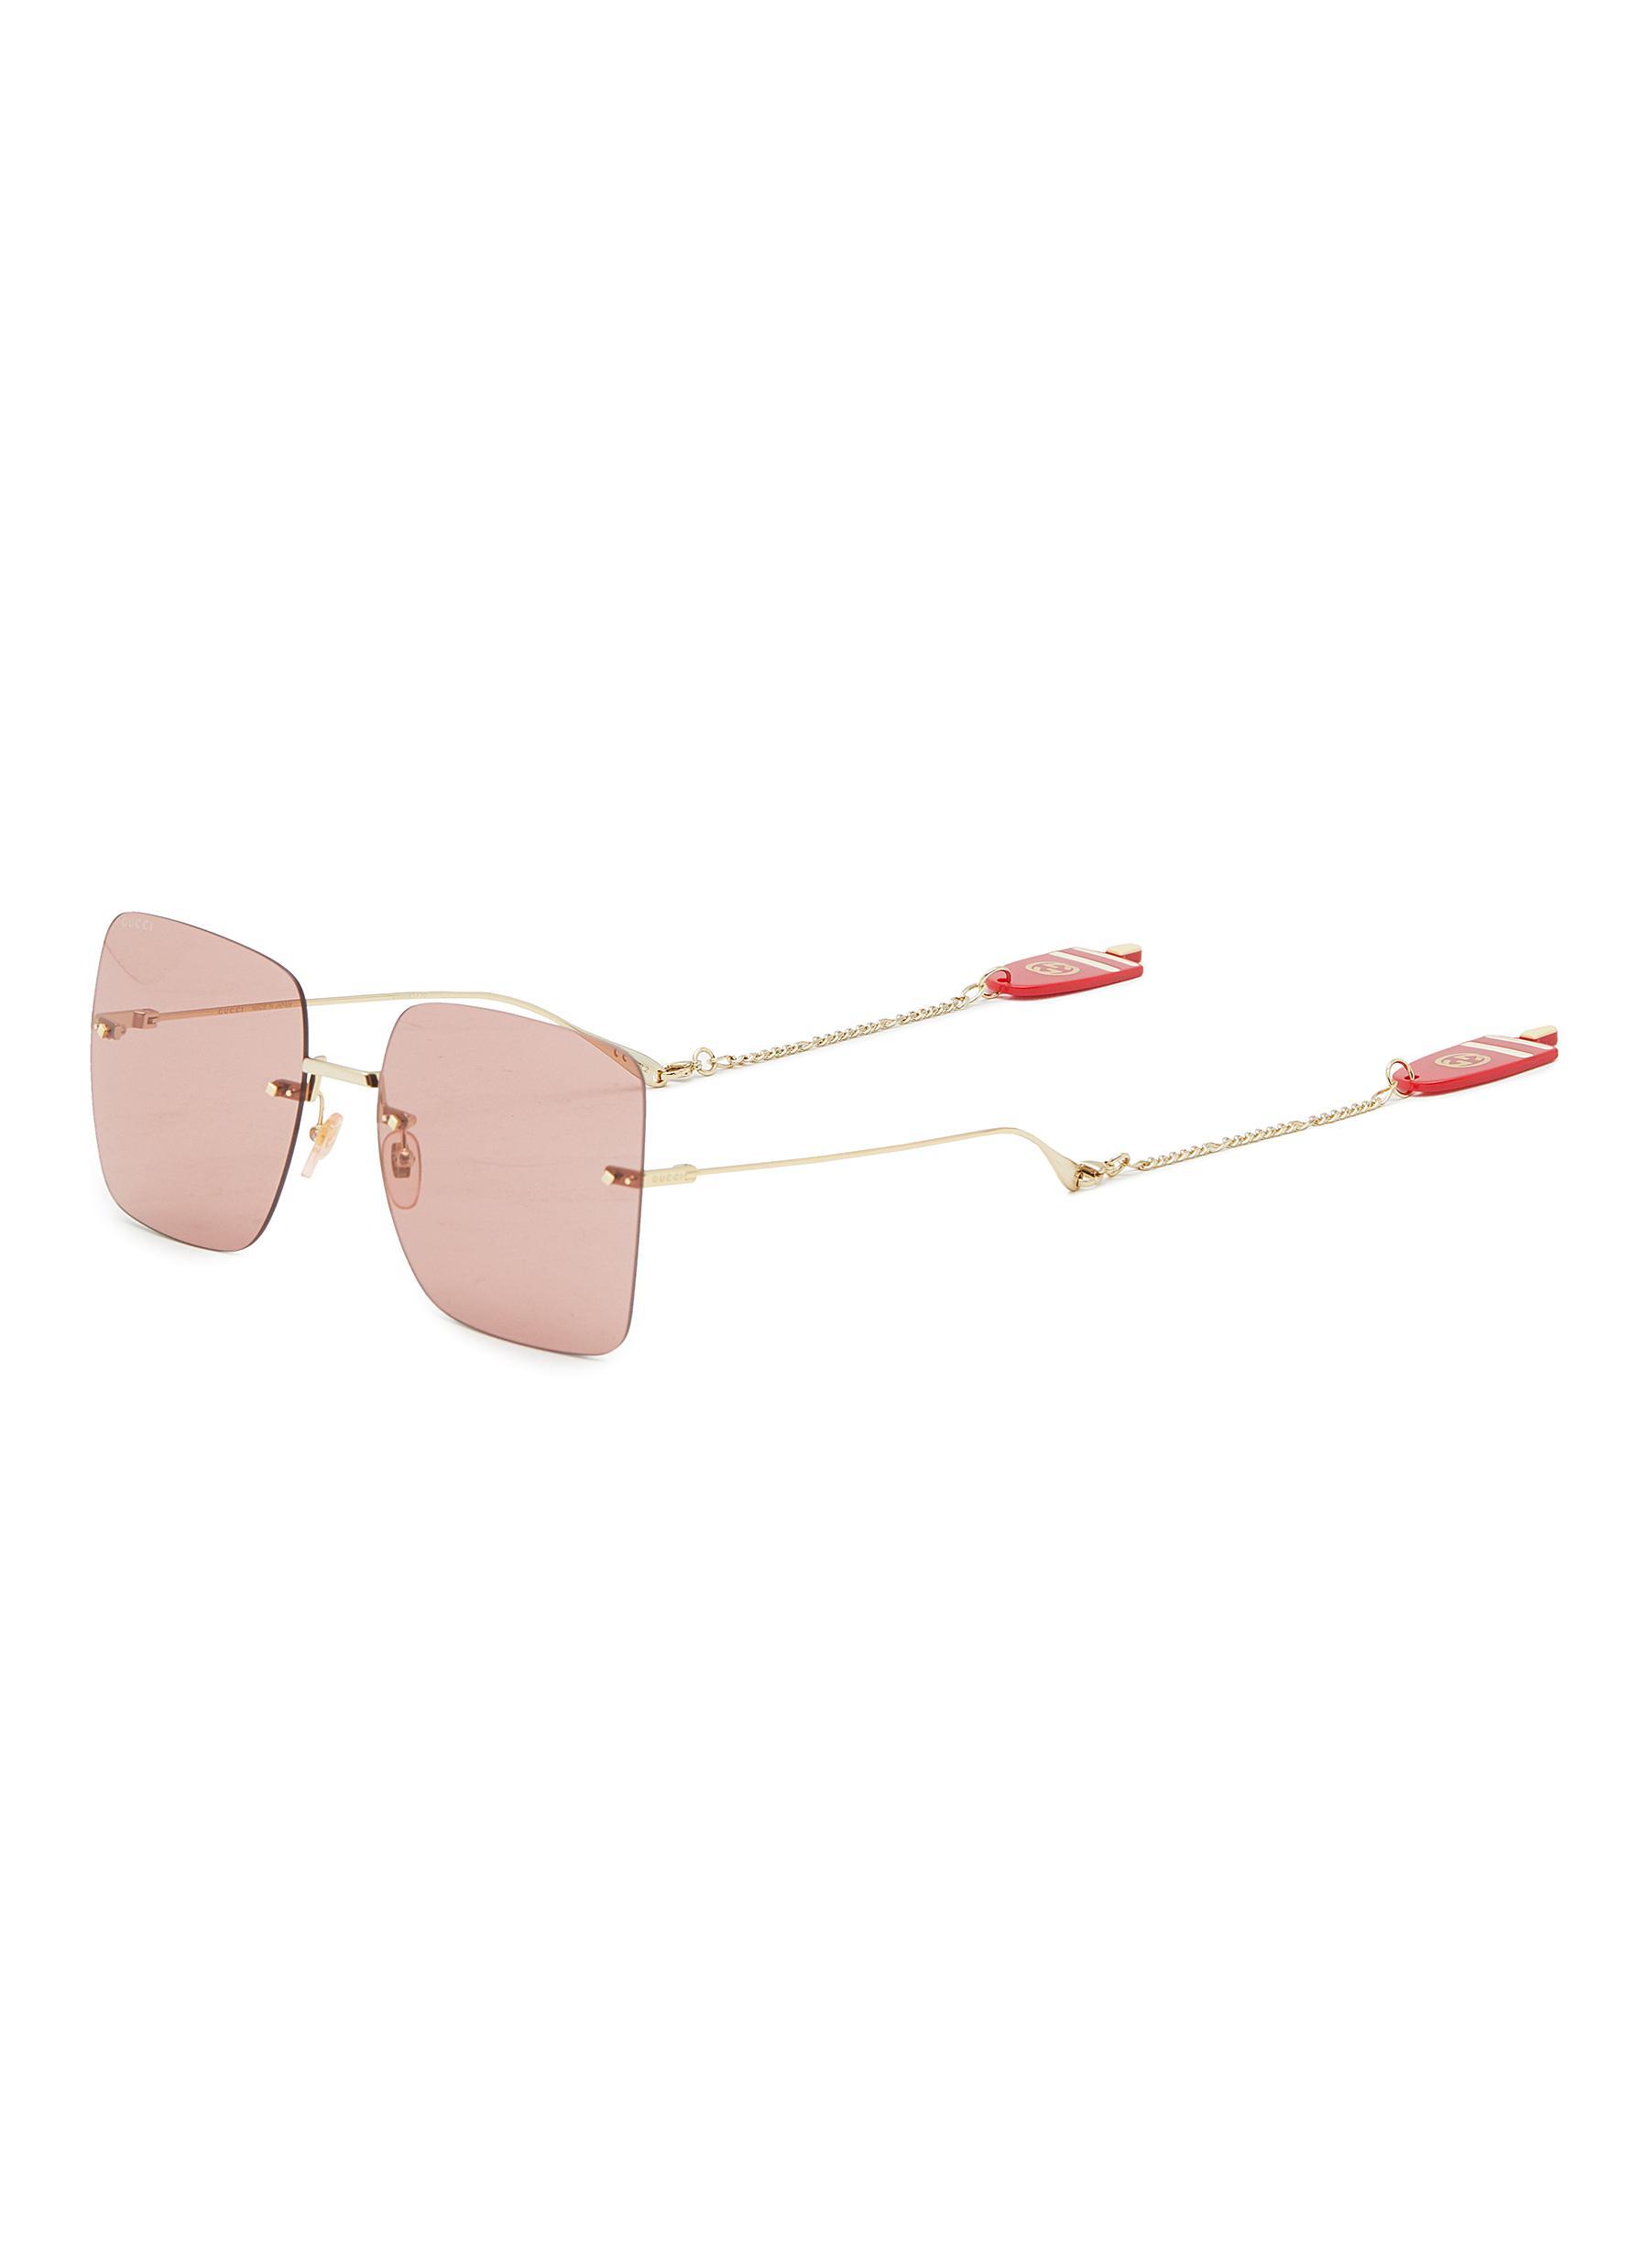 Sell Gucci Vintage Square Sunglasses - Brown | HuntStreet.com